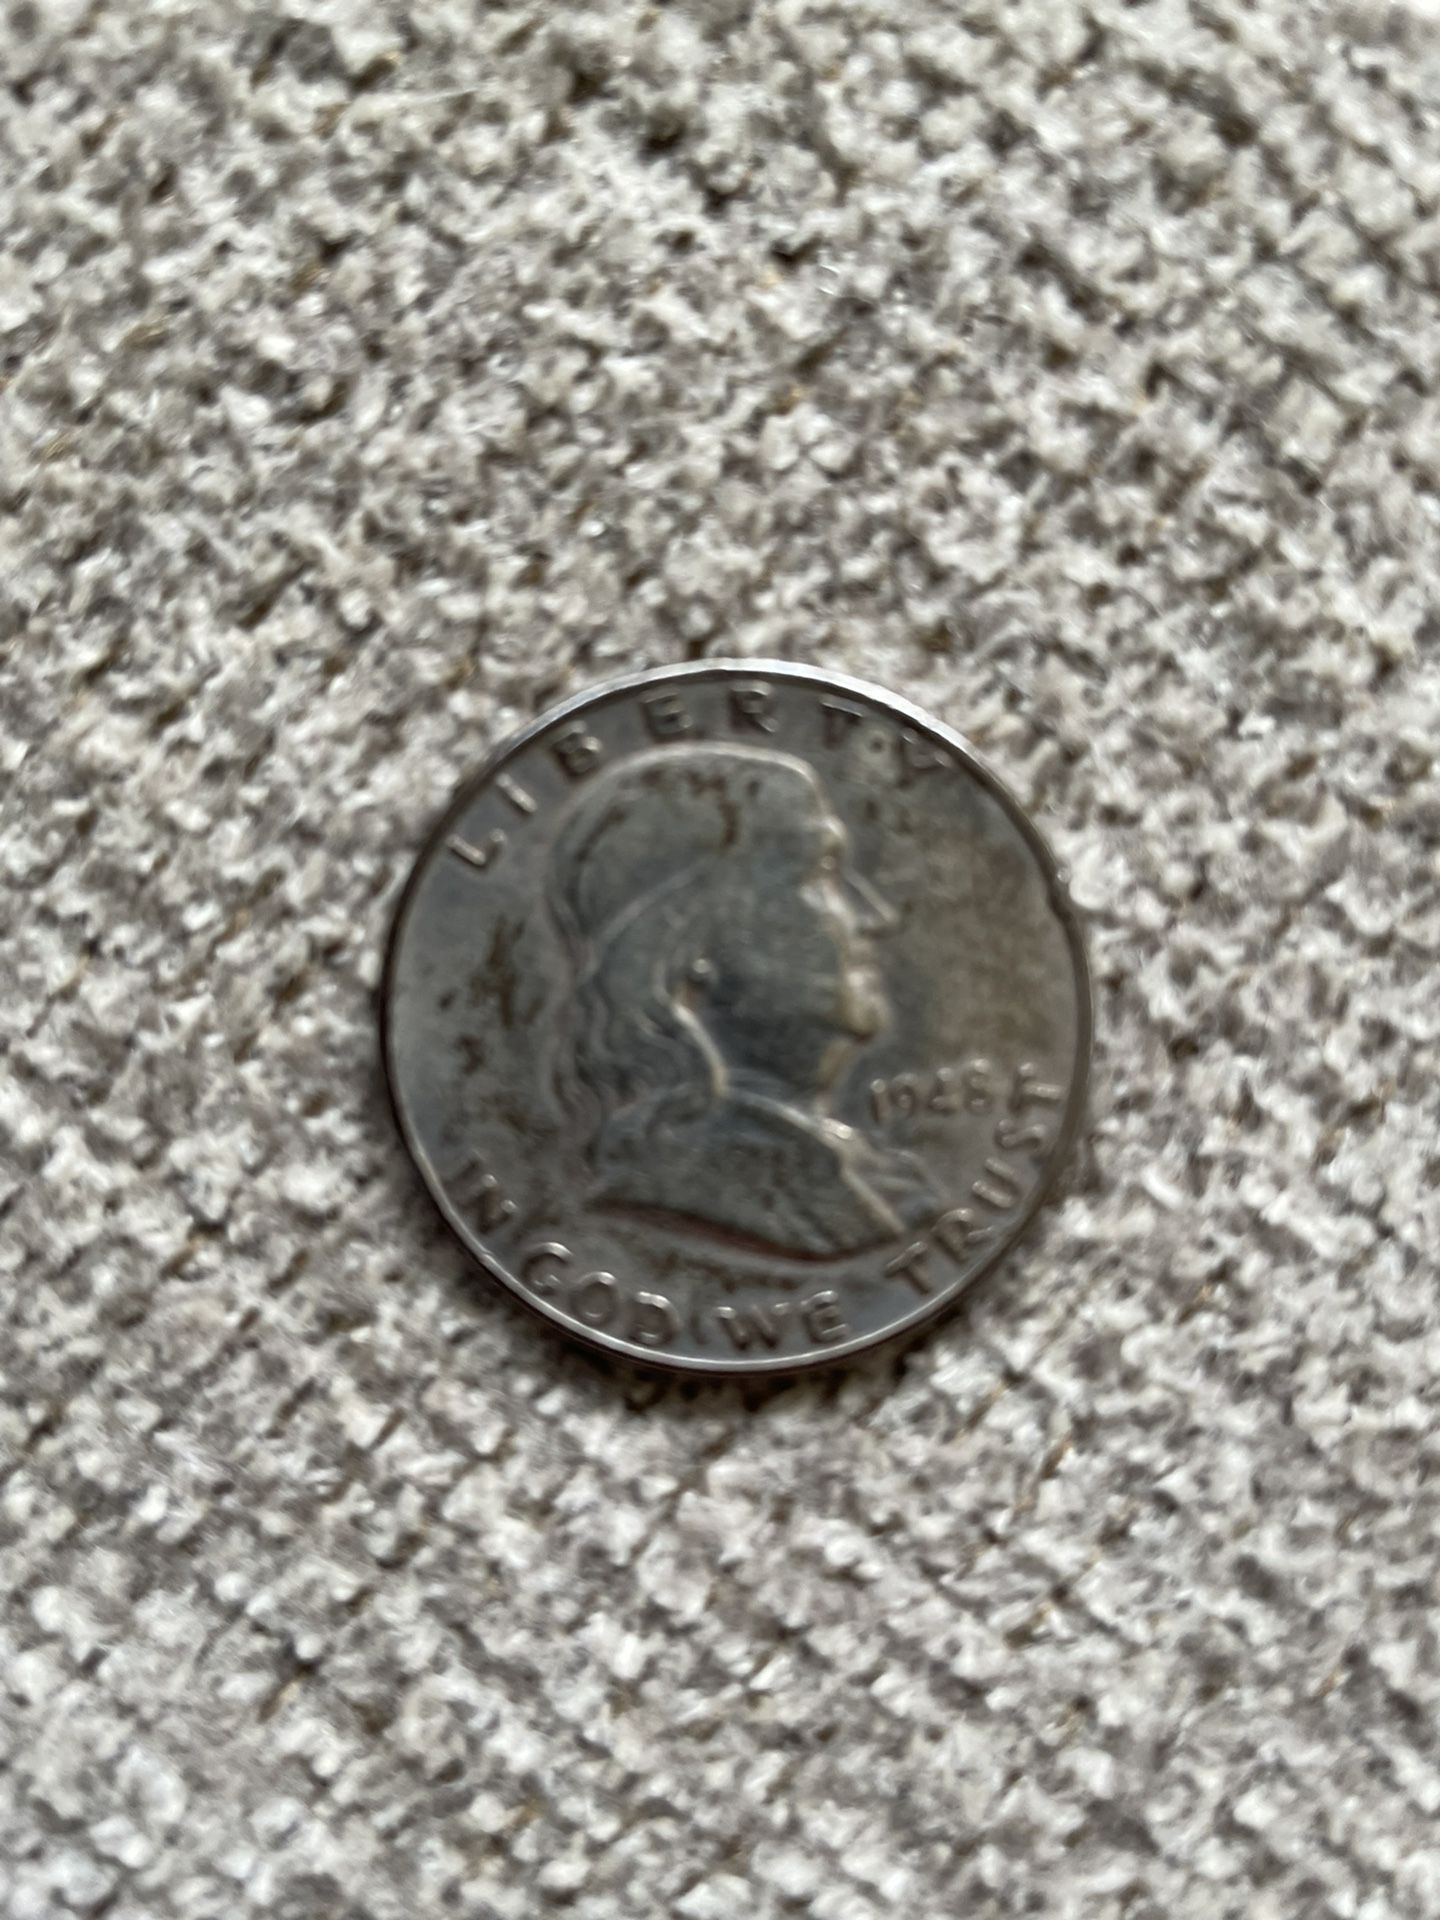 1948 Ben Franklin Half Dollar